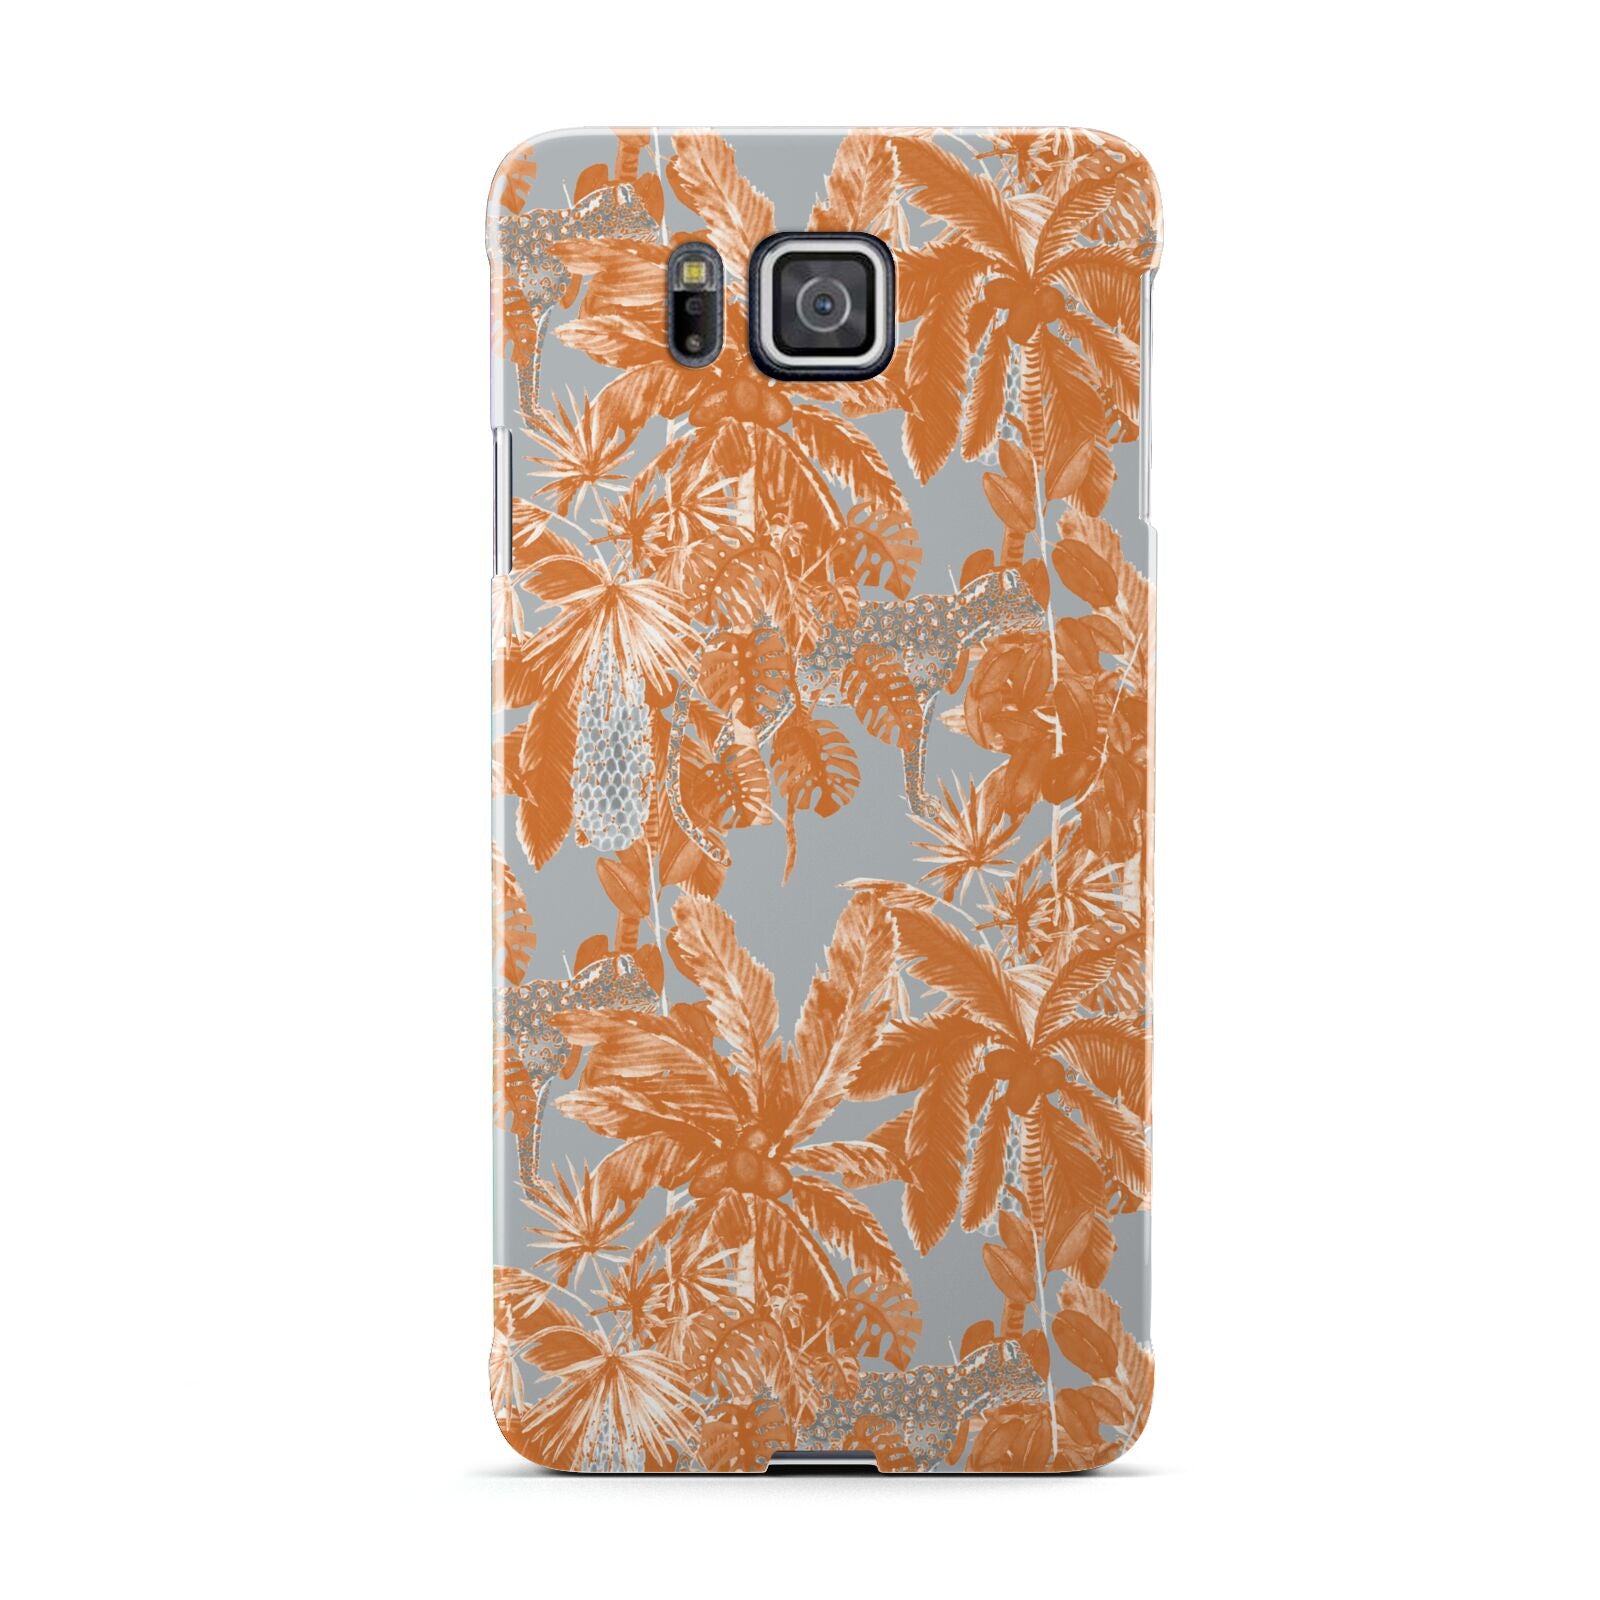 Tropical Samsung Galaxy Alpha Case